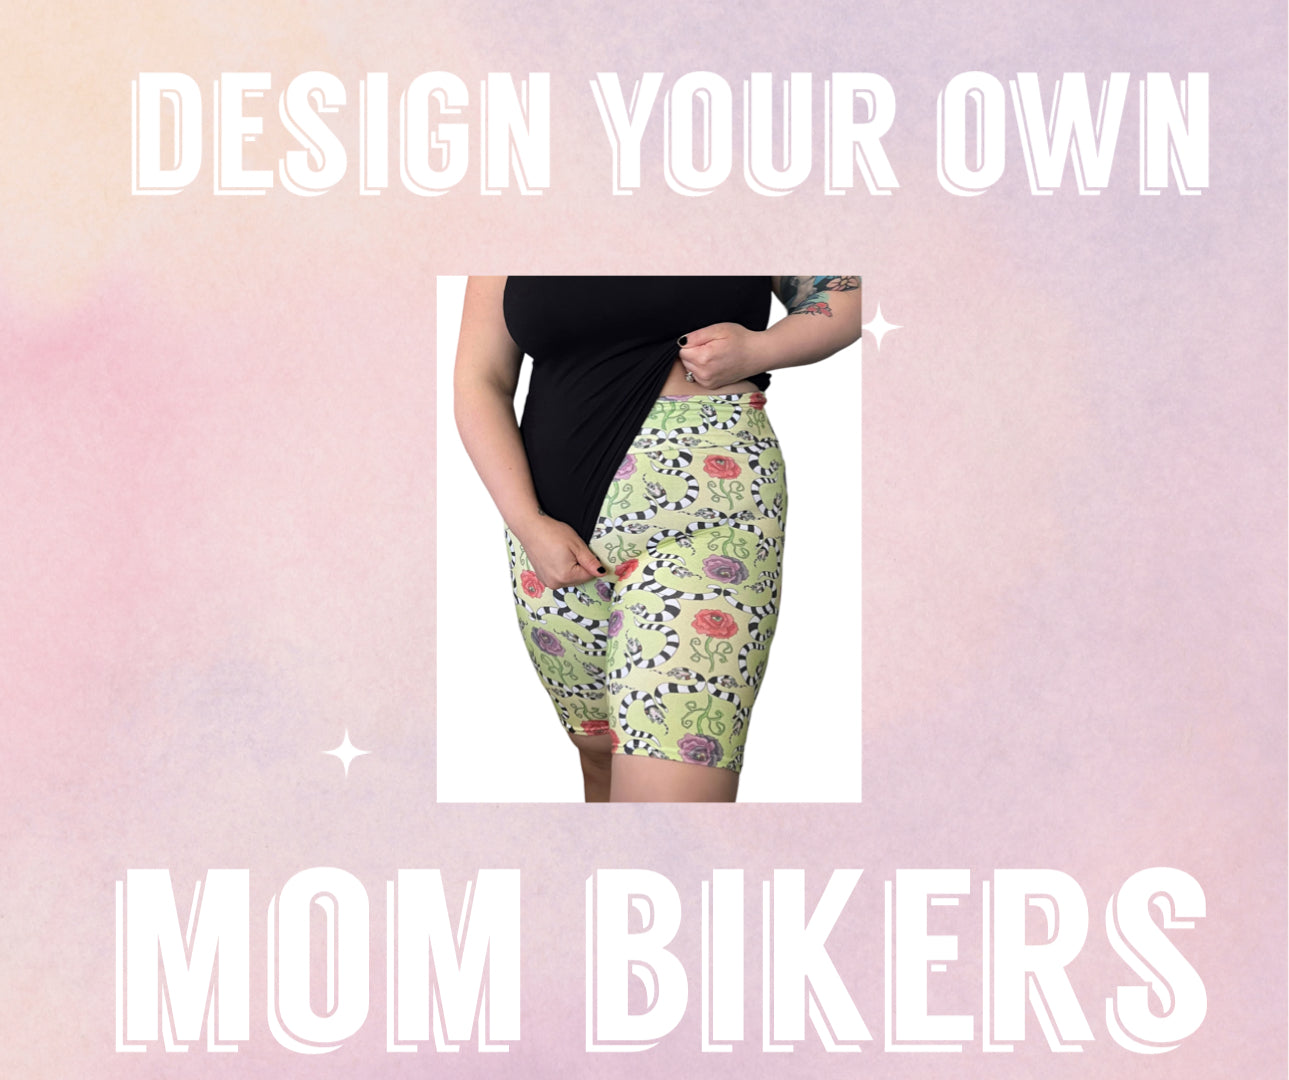 Design your own | Mom Biker Shorts